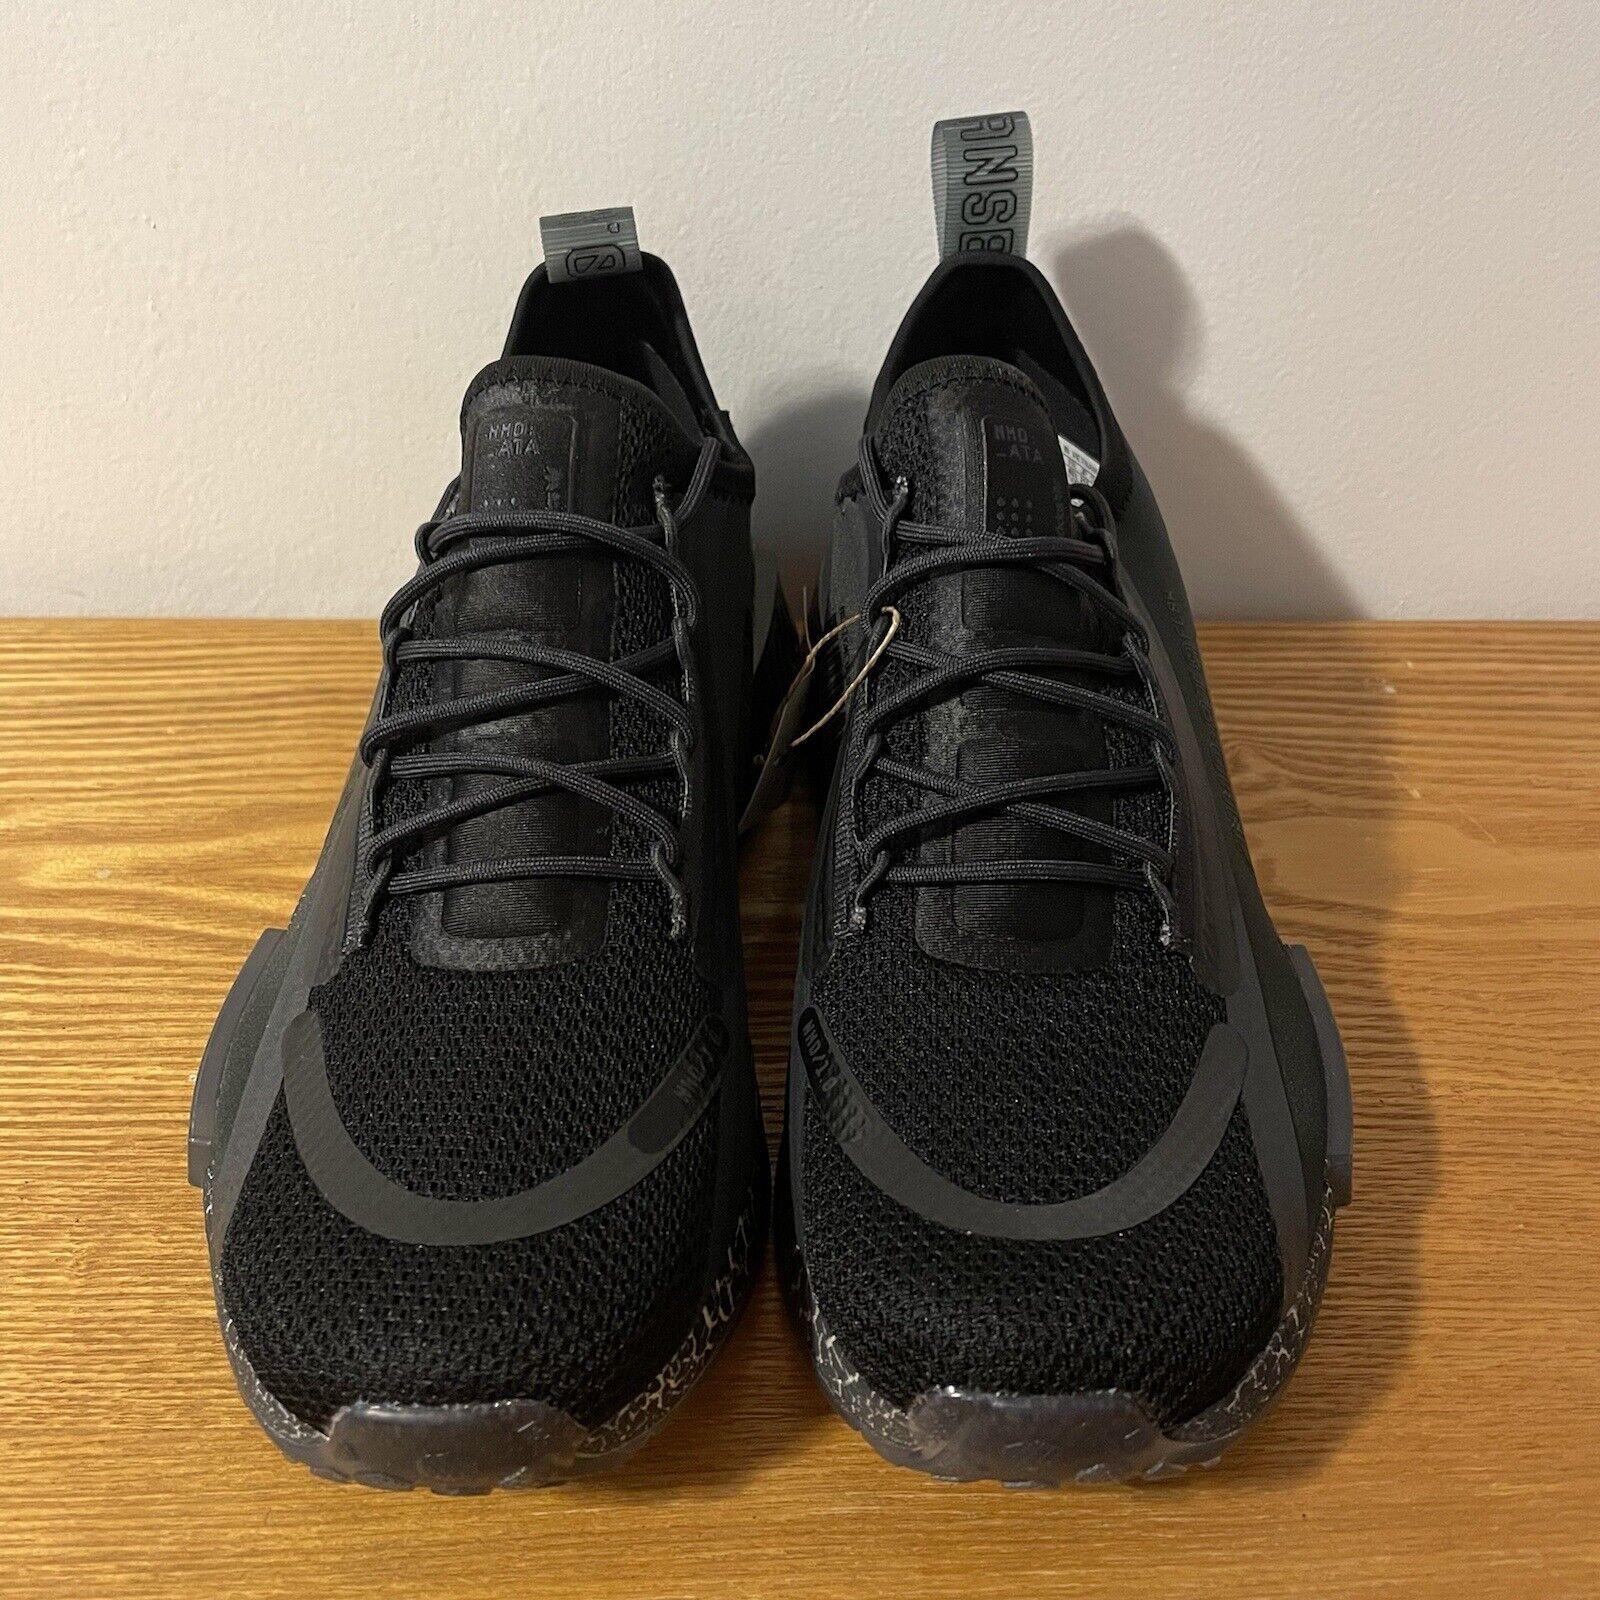 Adidas shoes NMD - Black 0